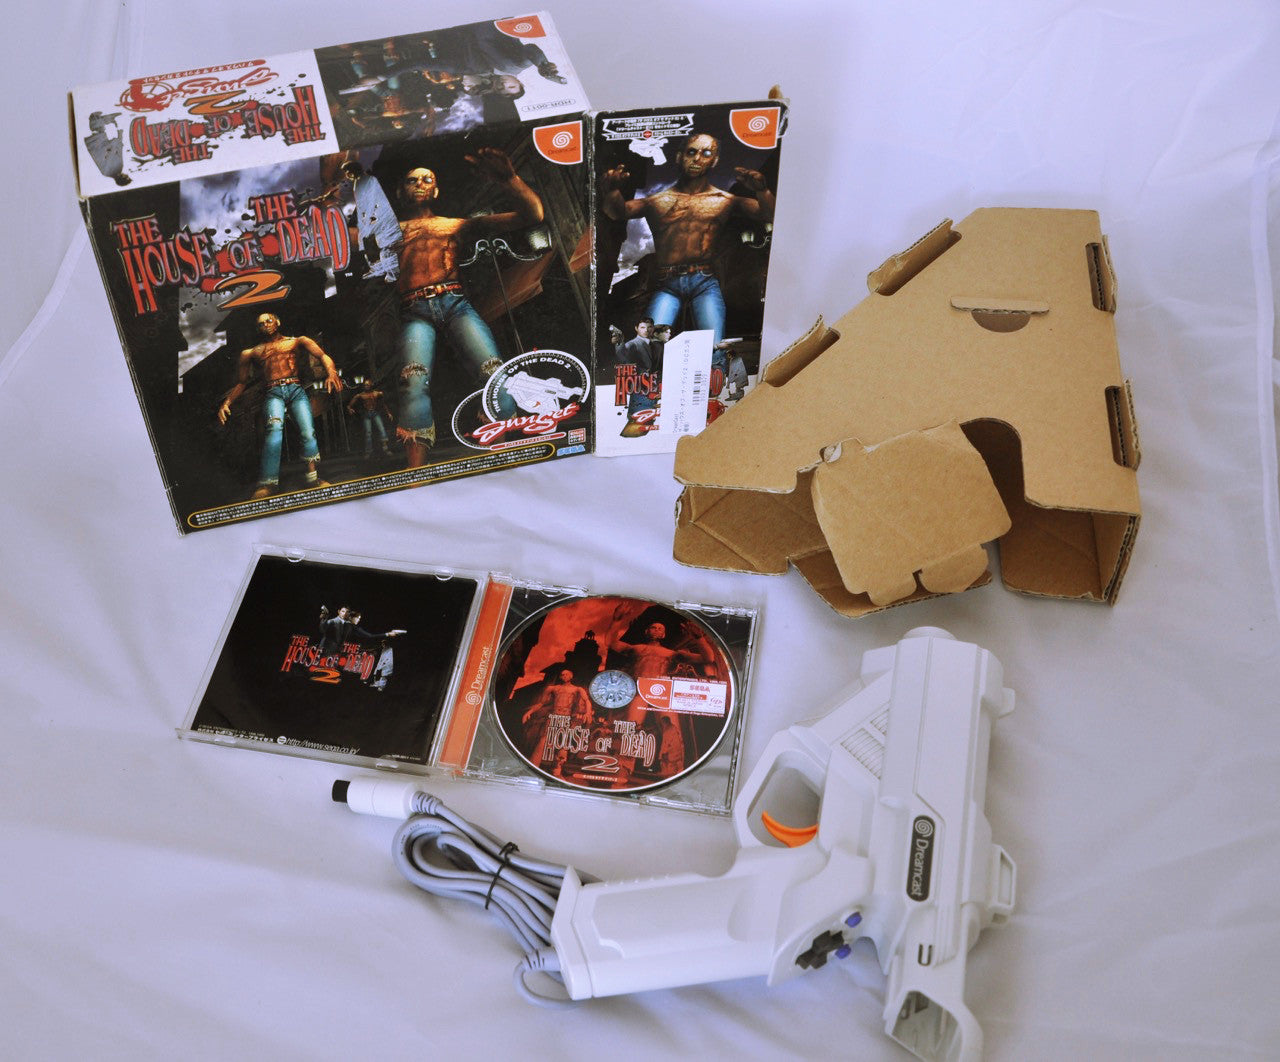 Game | SEGA Dreamcast | House Of The Dead 2 Gunset Boxed HDR-0011 - retrosales.com.au - 2